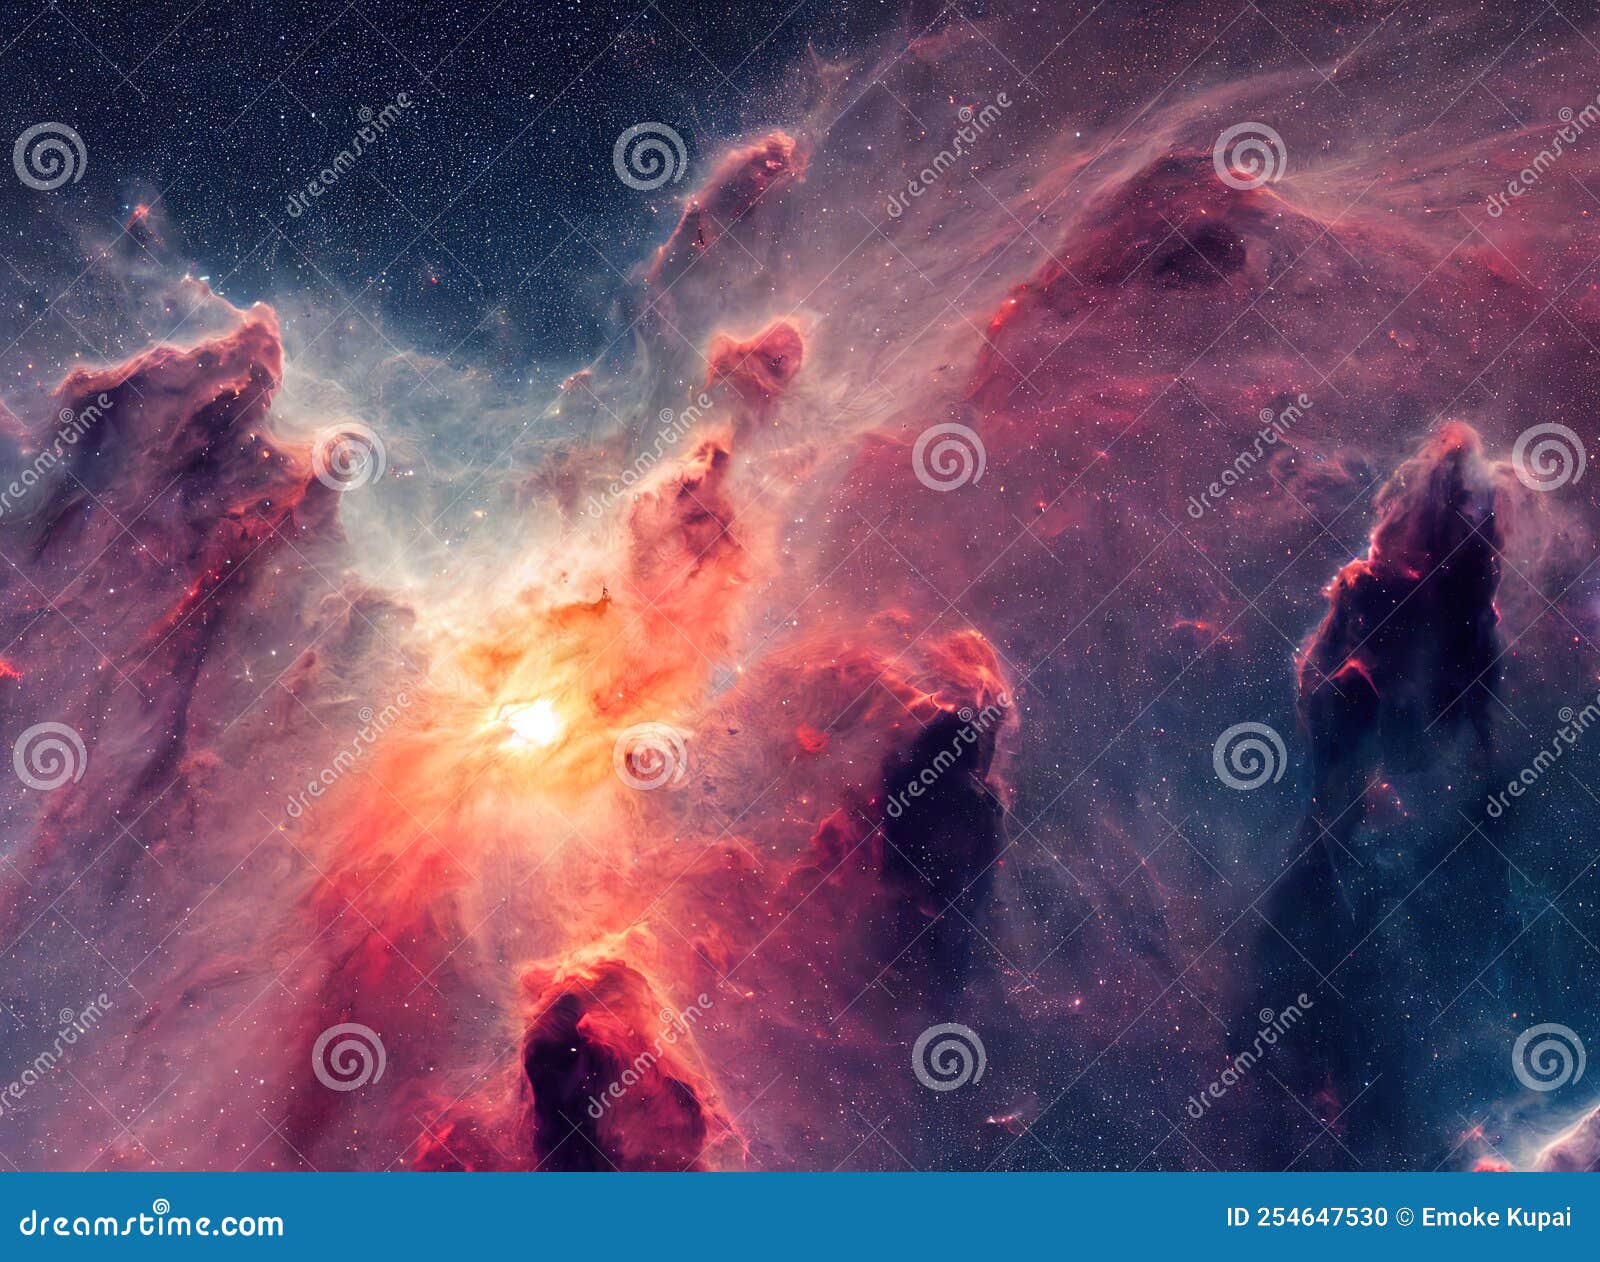 nebula star birth james webb digital art